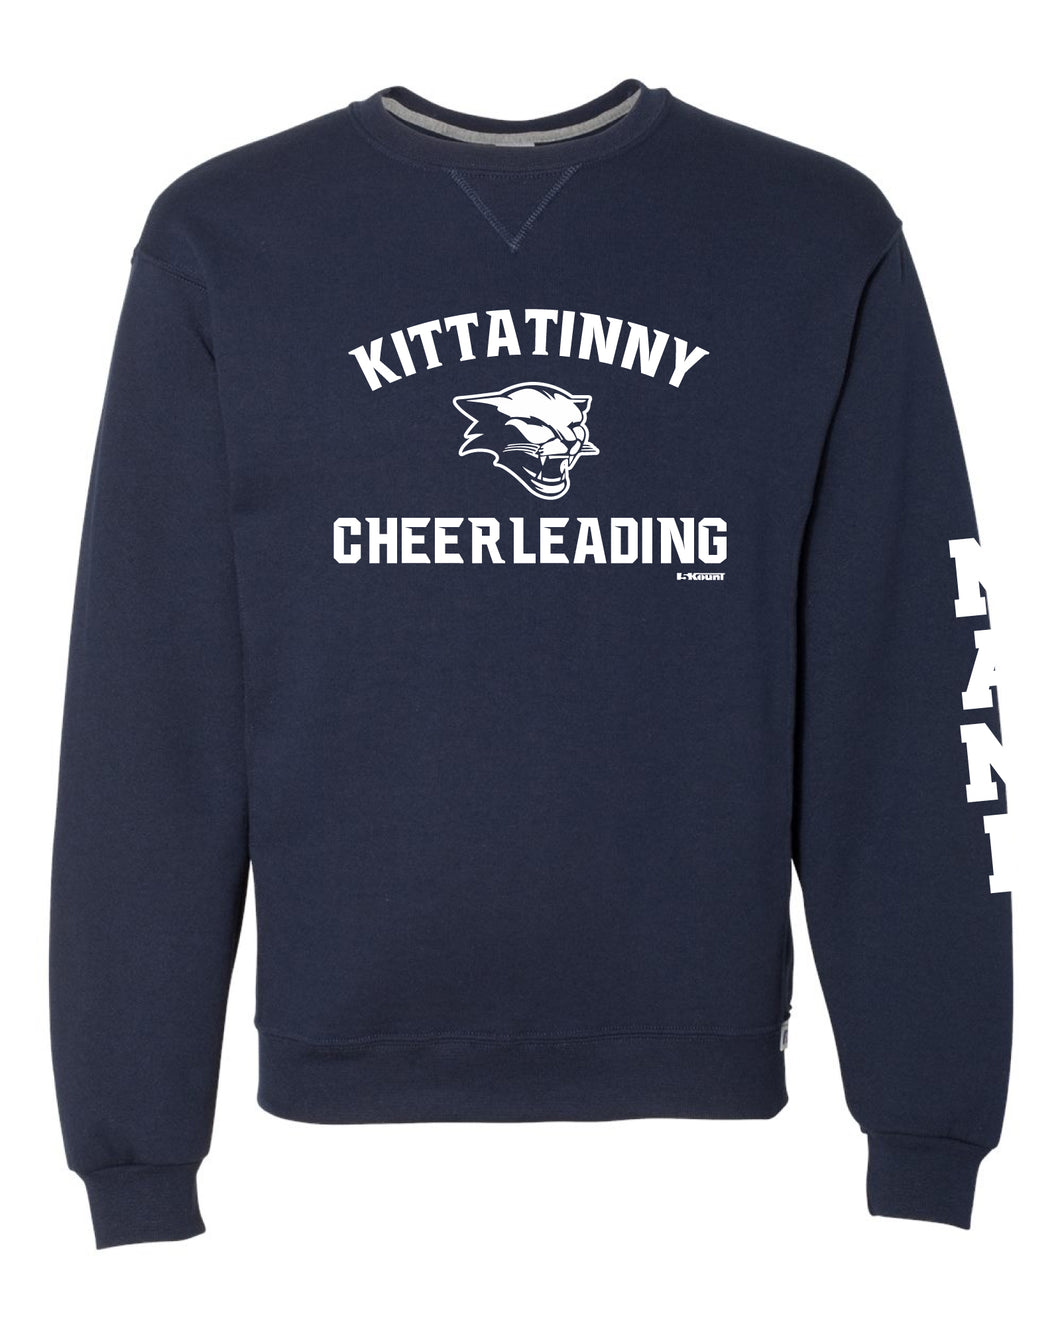 Kittatinny Cheer Russell Athletic Cotton Crewneck Sweatshirt - Navy - 5KounT2018